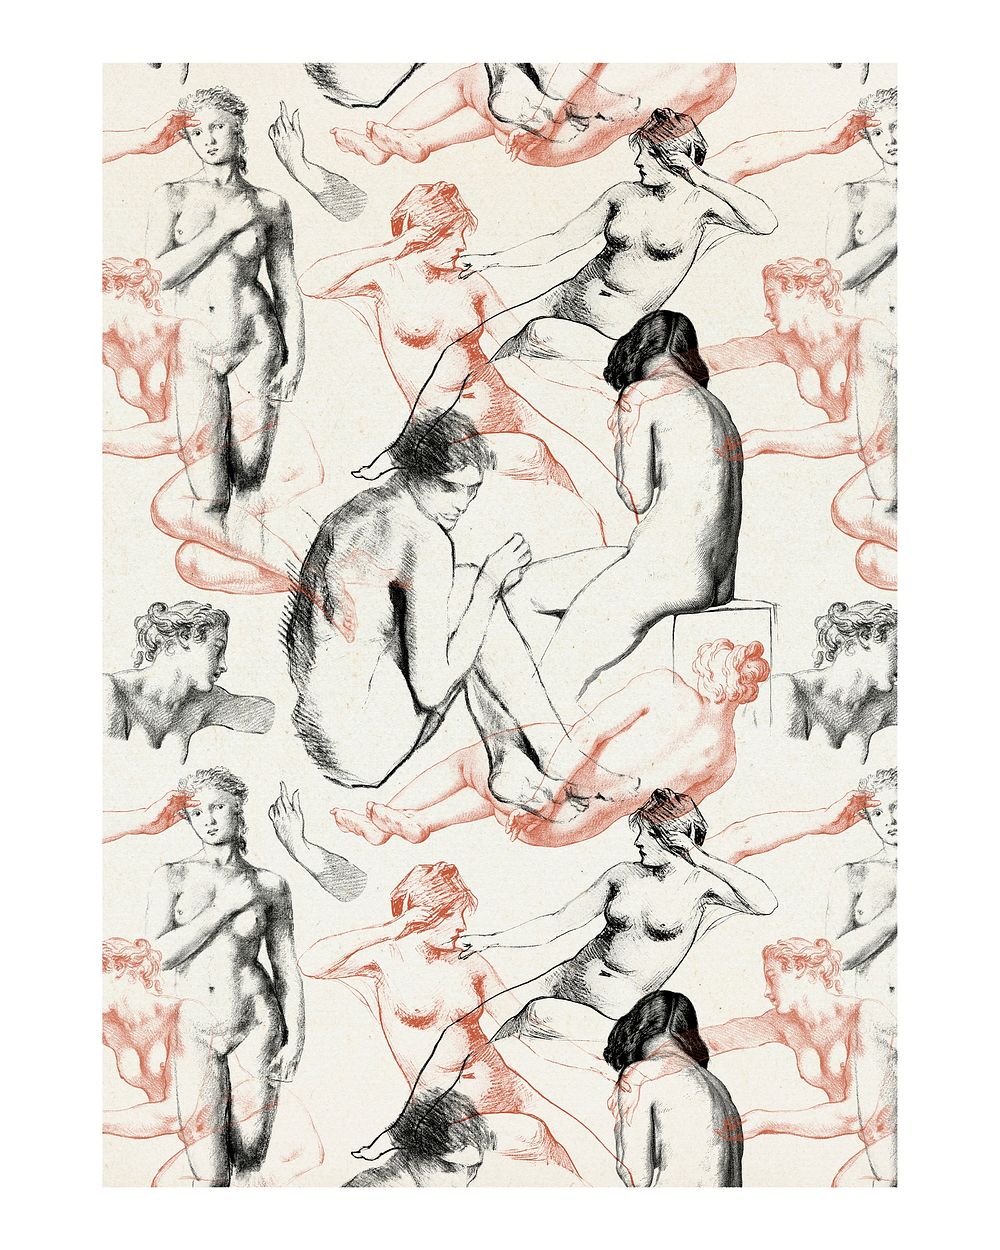 Woman line art poster, vintage pattern design